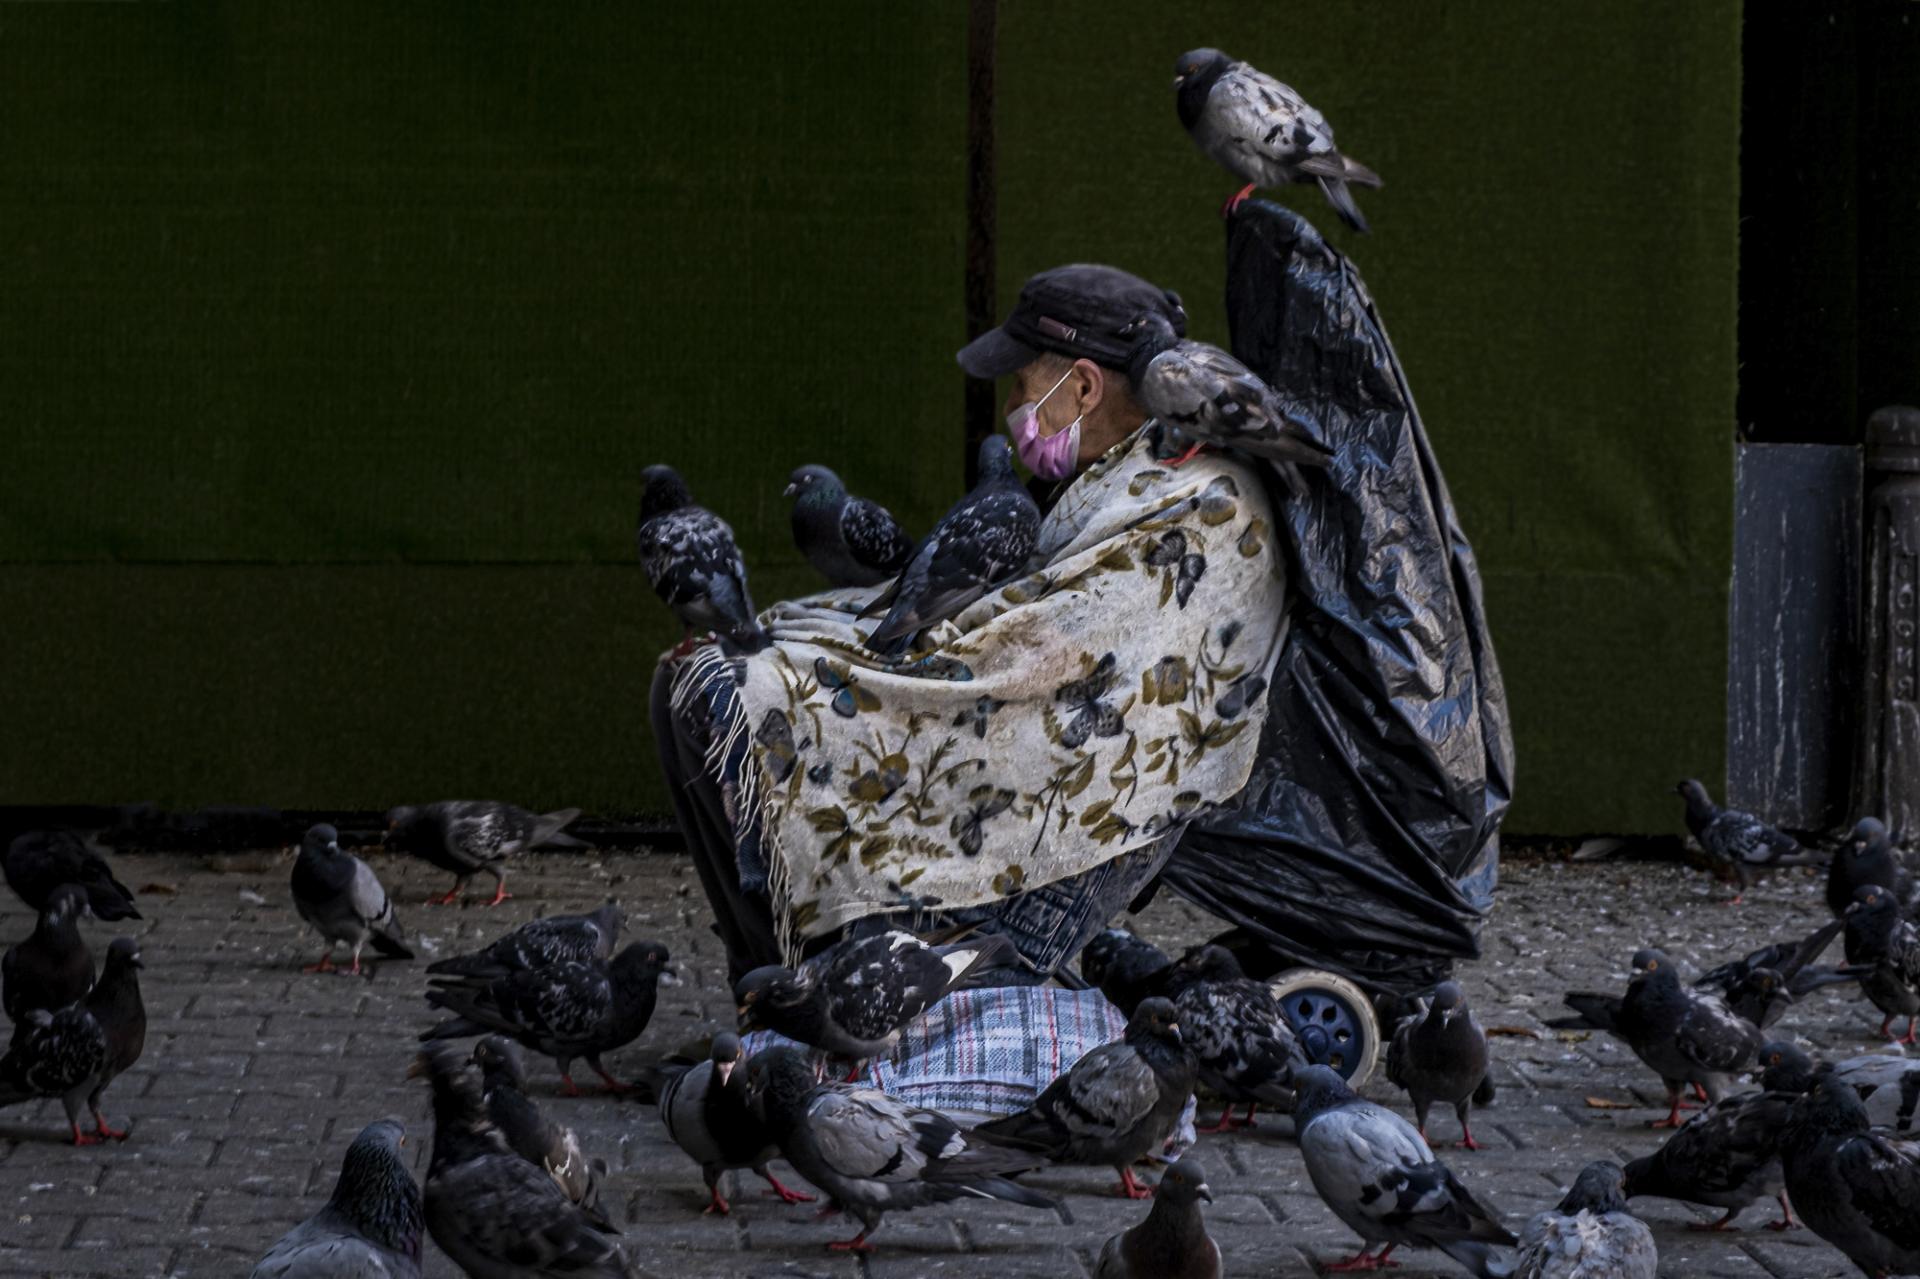 London Photography Awards Winner - Reine des pigeons